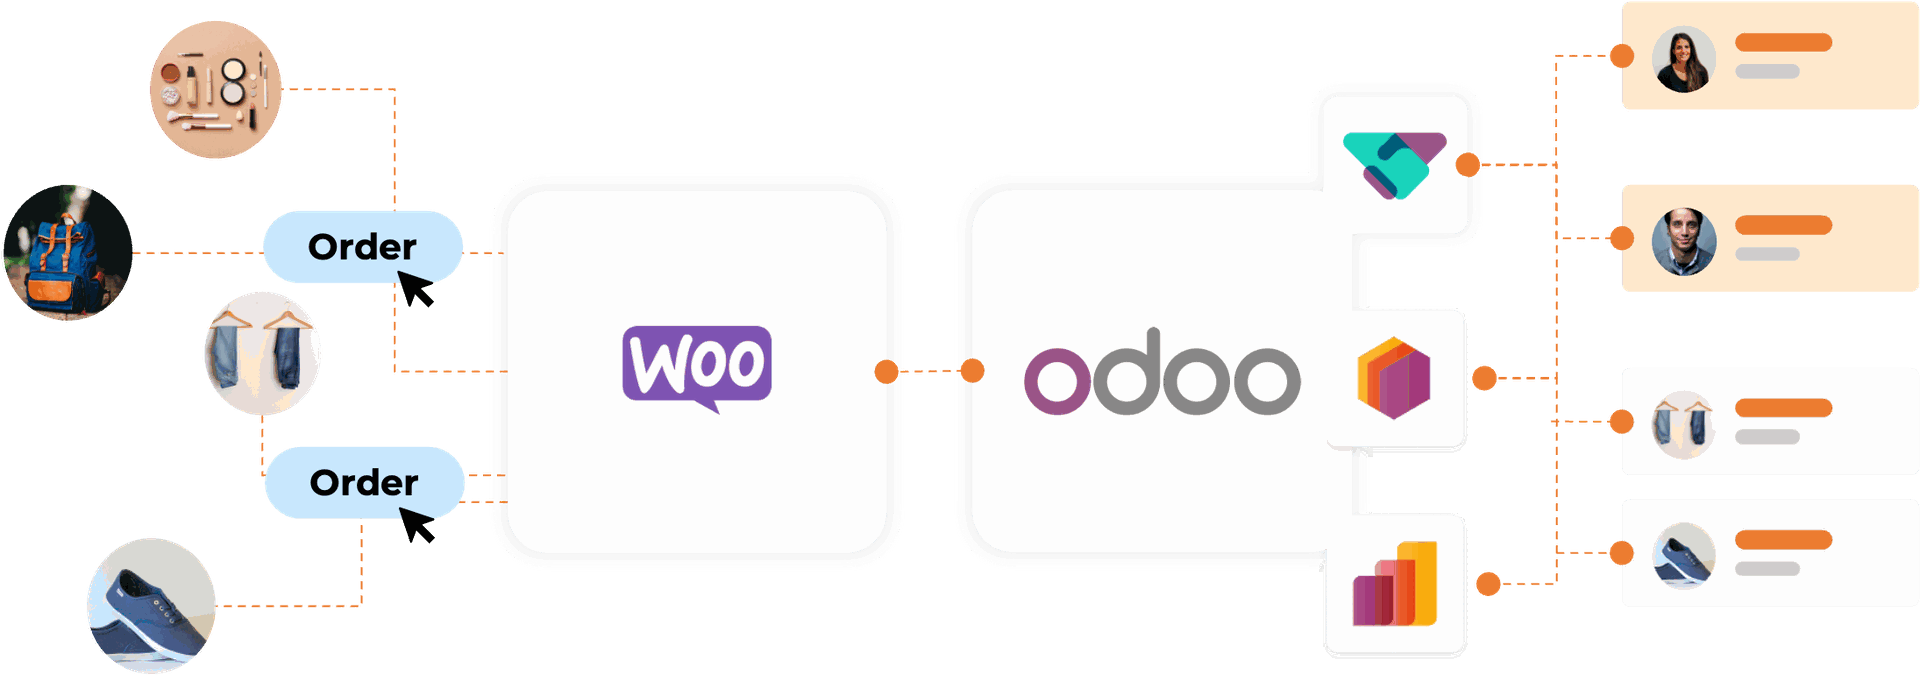 WooCommerce Odoo Integation